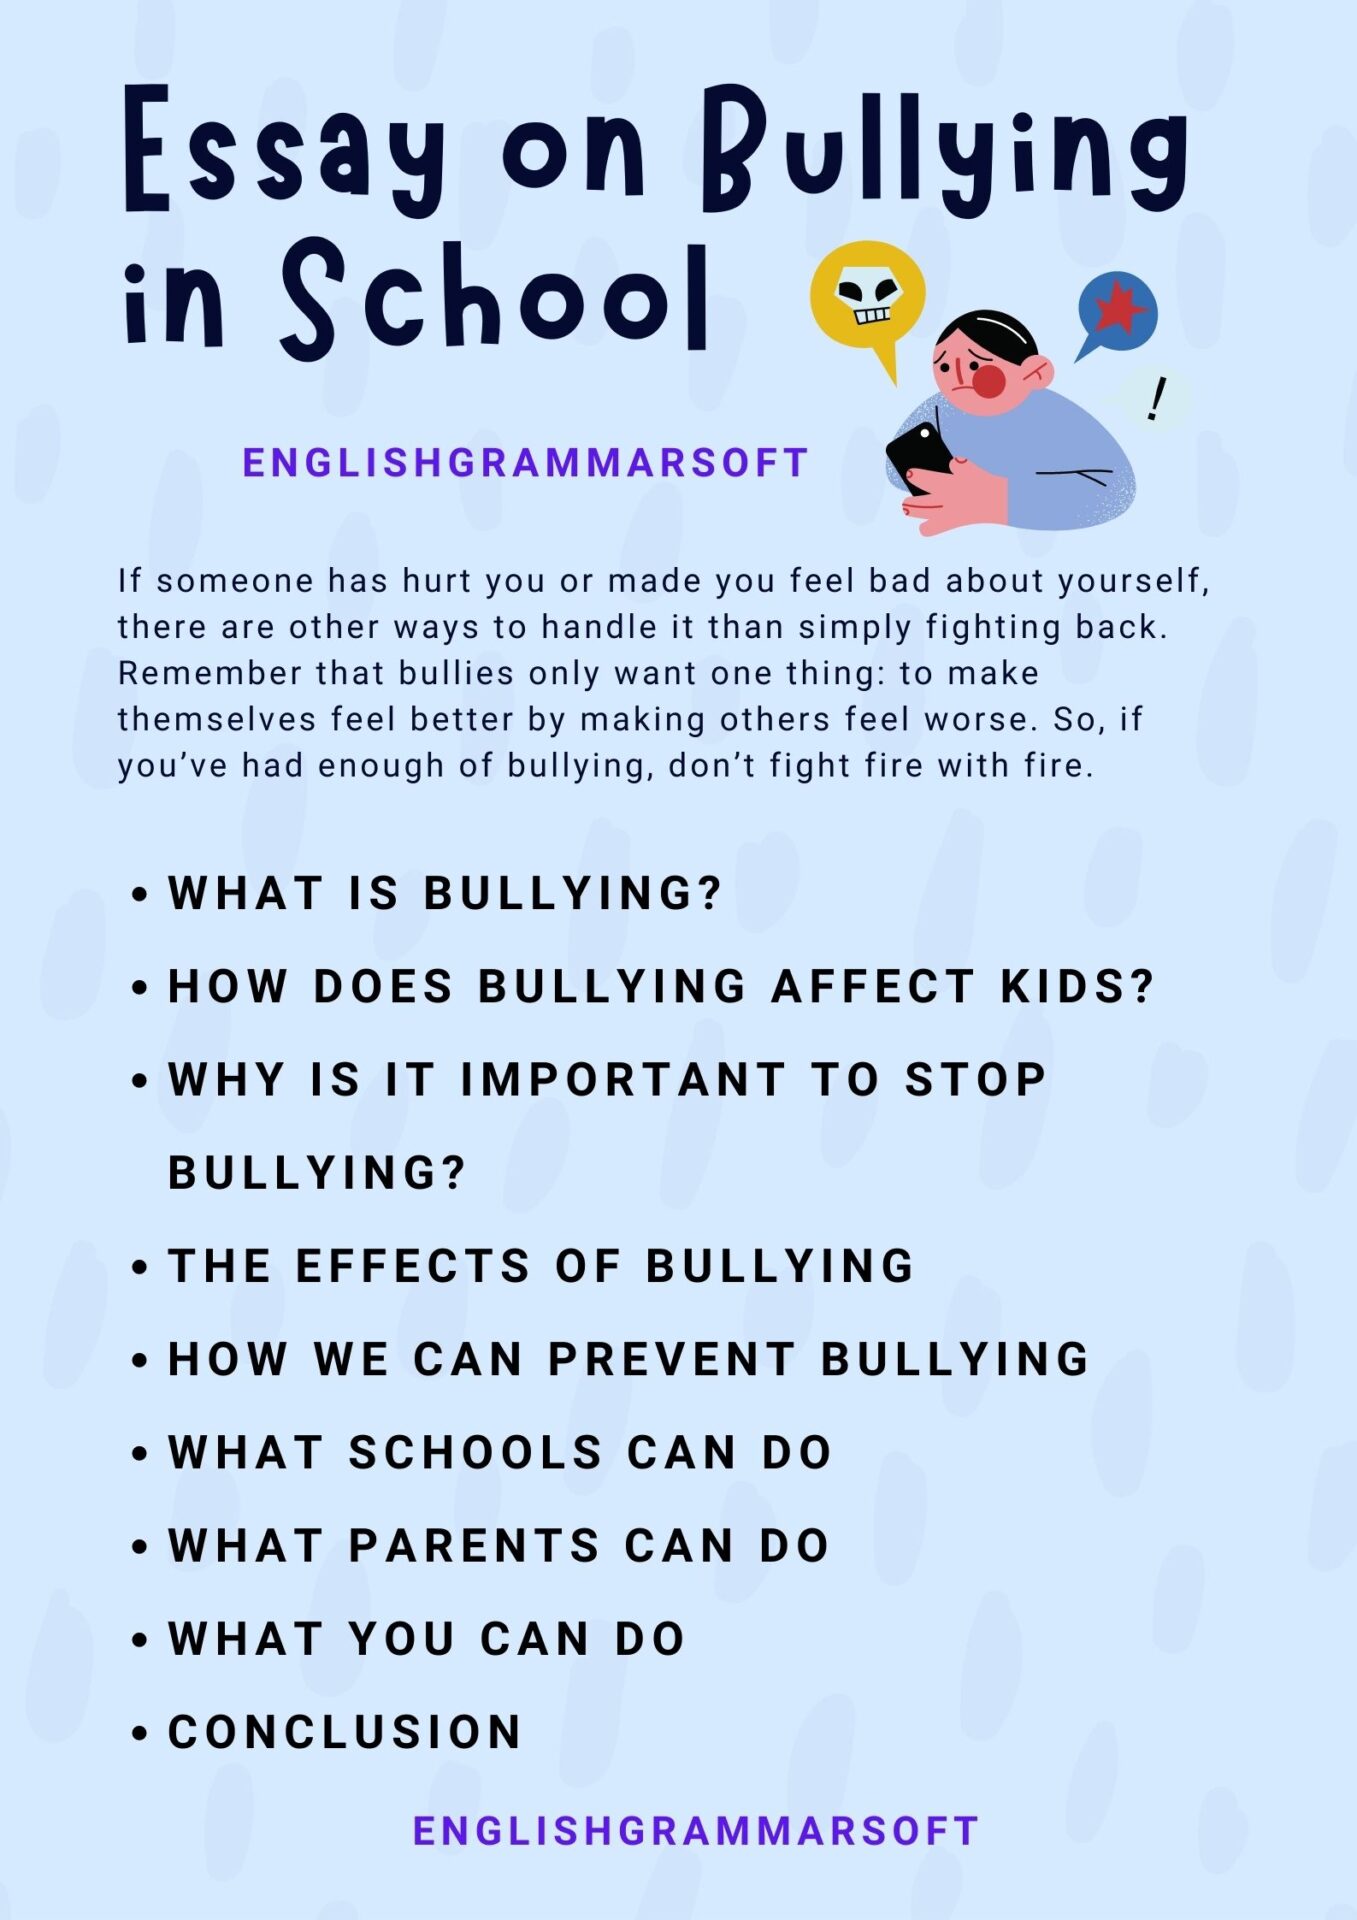 Essay on Bullying in Schools